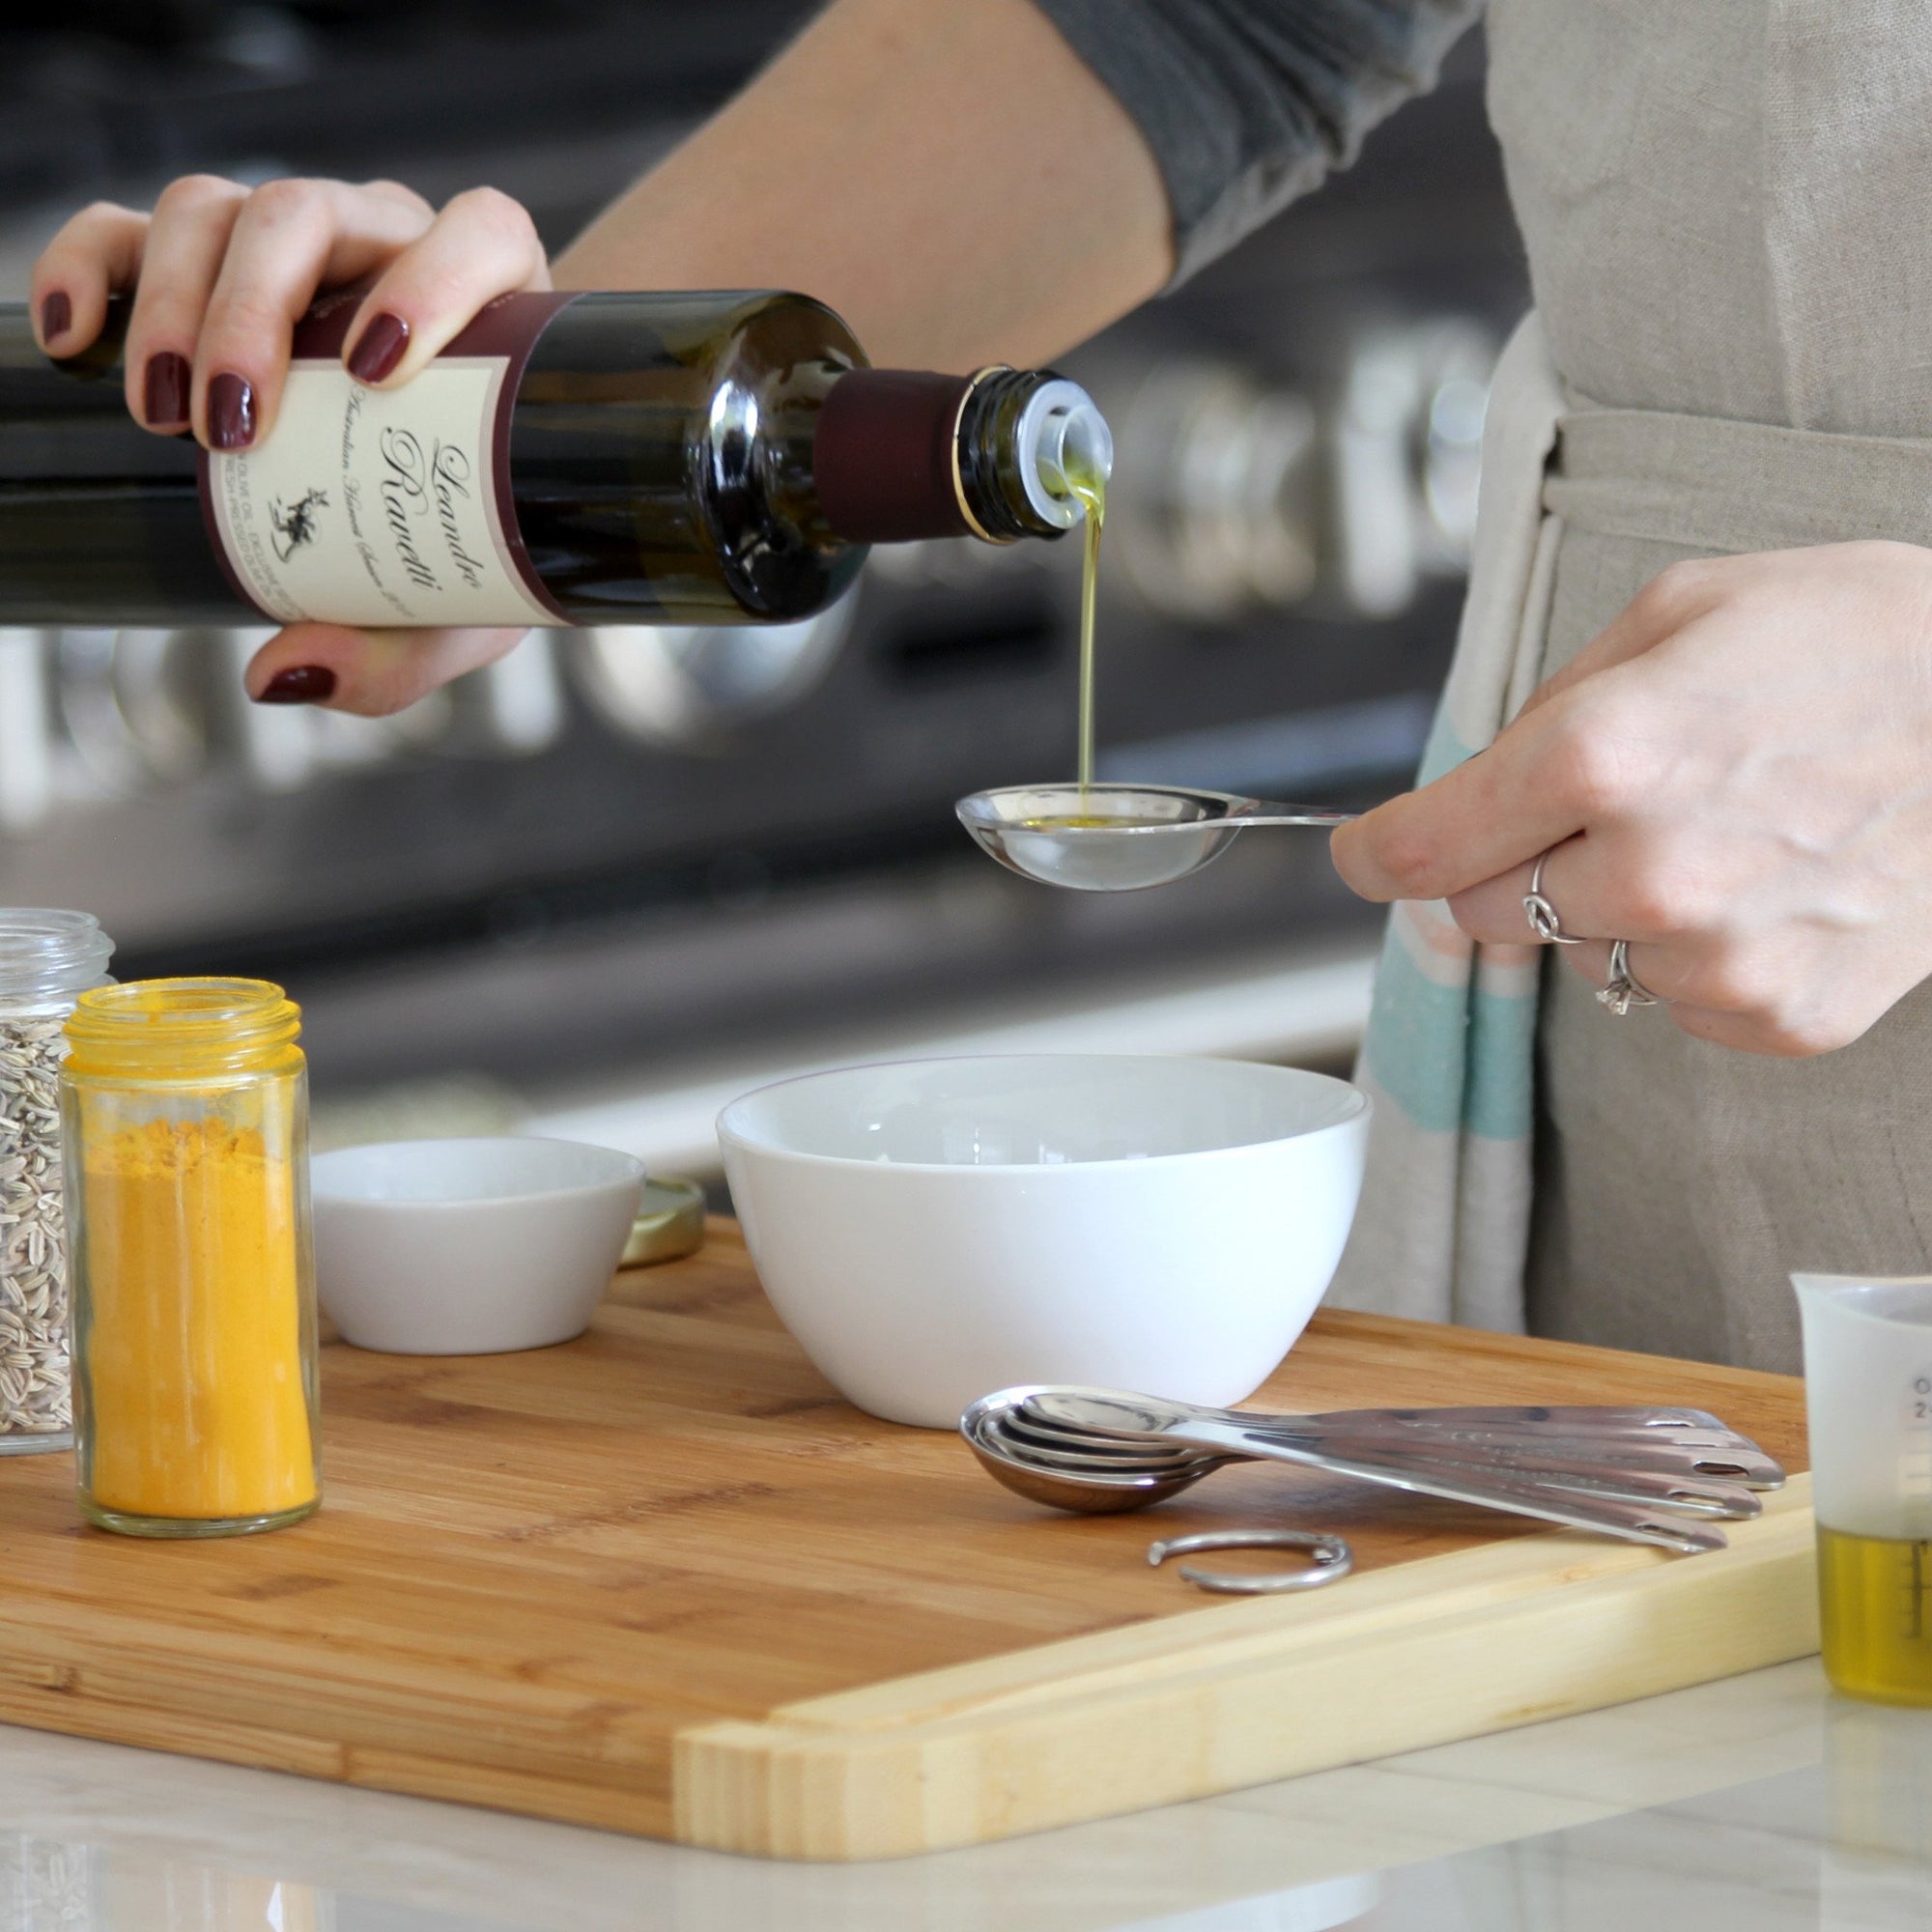 Cuisinox Measuring Spoon Set of 6 – Inox Kitchenware